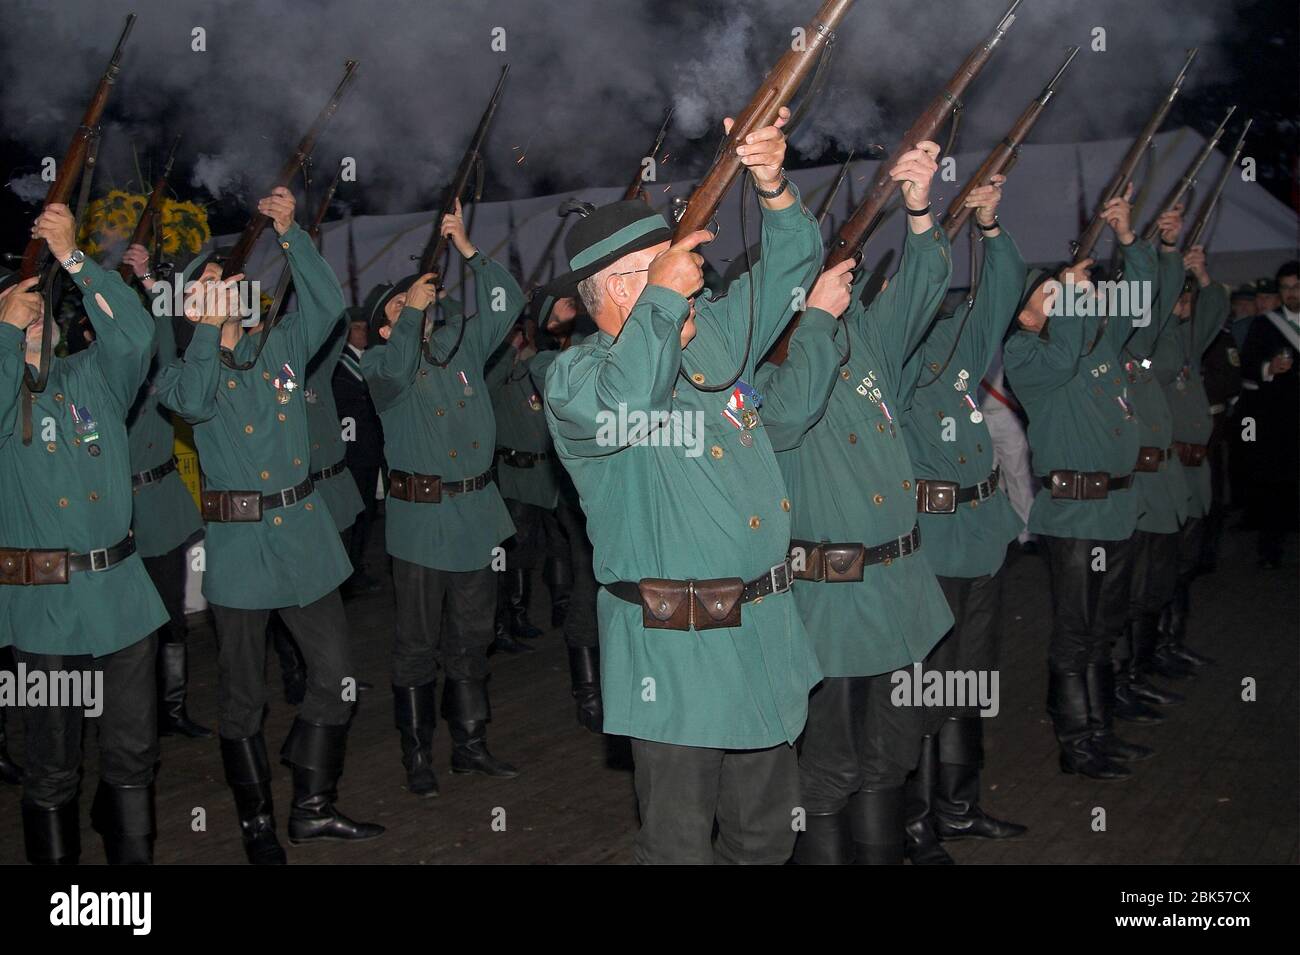 A group of uniformed shooters salute rifles. Eine Gruppe uniformierter Schützen begrüßt Gewehre. Grupa strzelców oddaje salut z karabinów. 一群射手向來复槍致敬。 Stock Photo